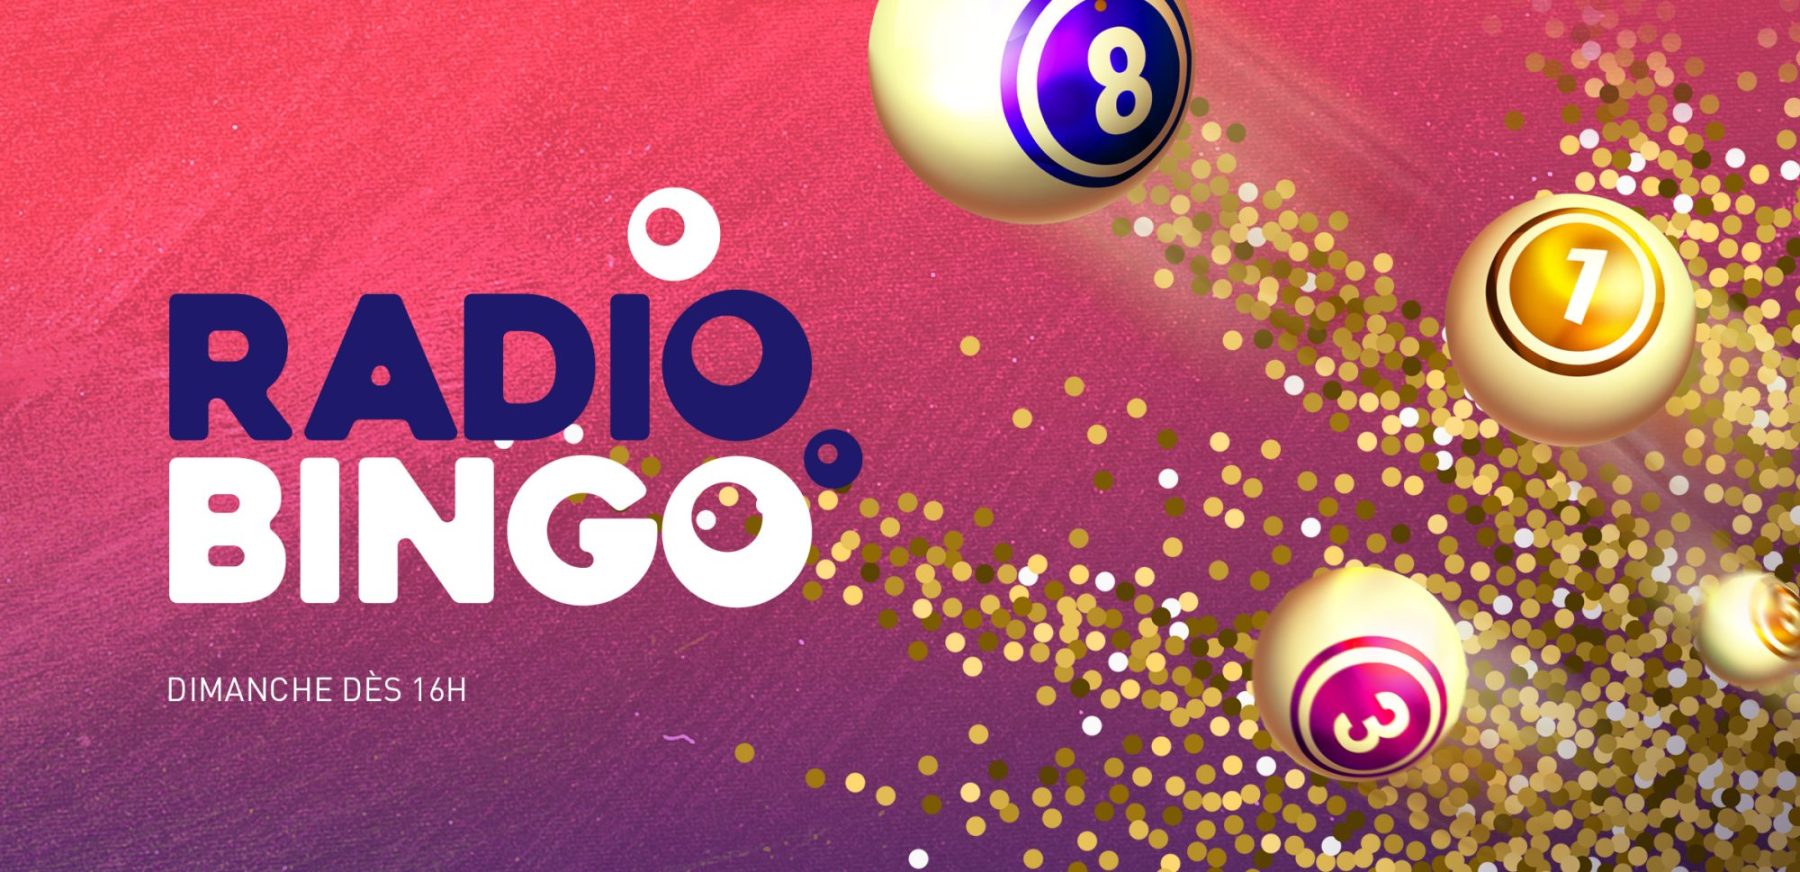 Radio Bingo - CIGN FM96.7 - Radio communautaire coopérative de Coaticook